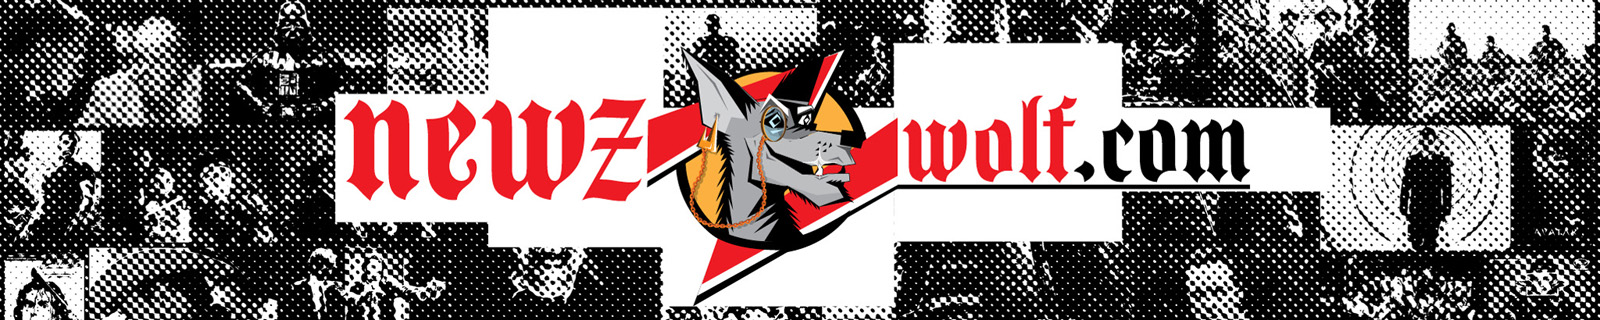 The official Wordpress of NEWZwolf.com